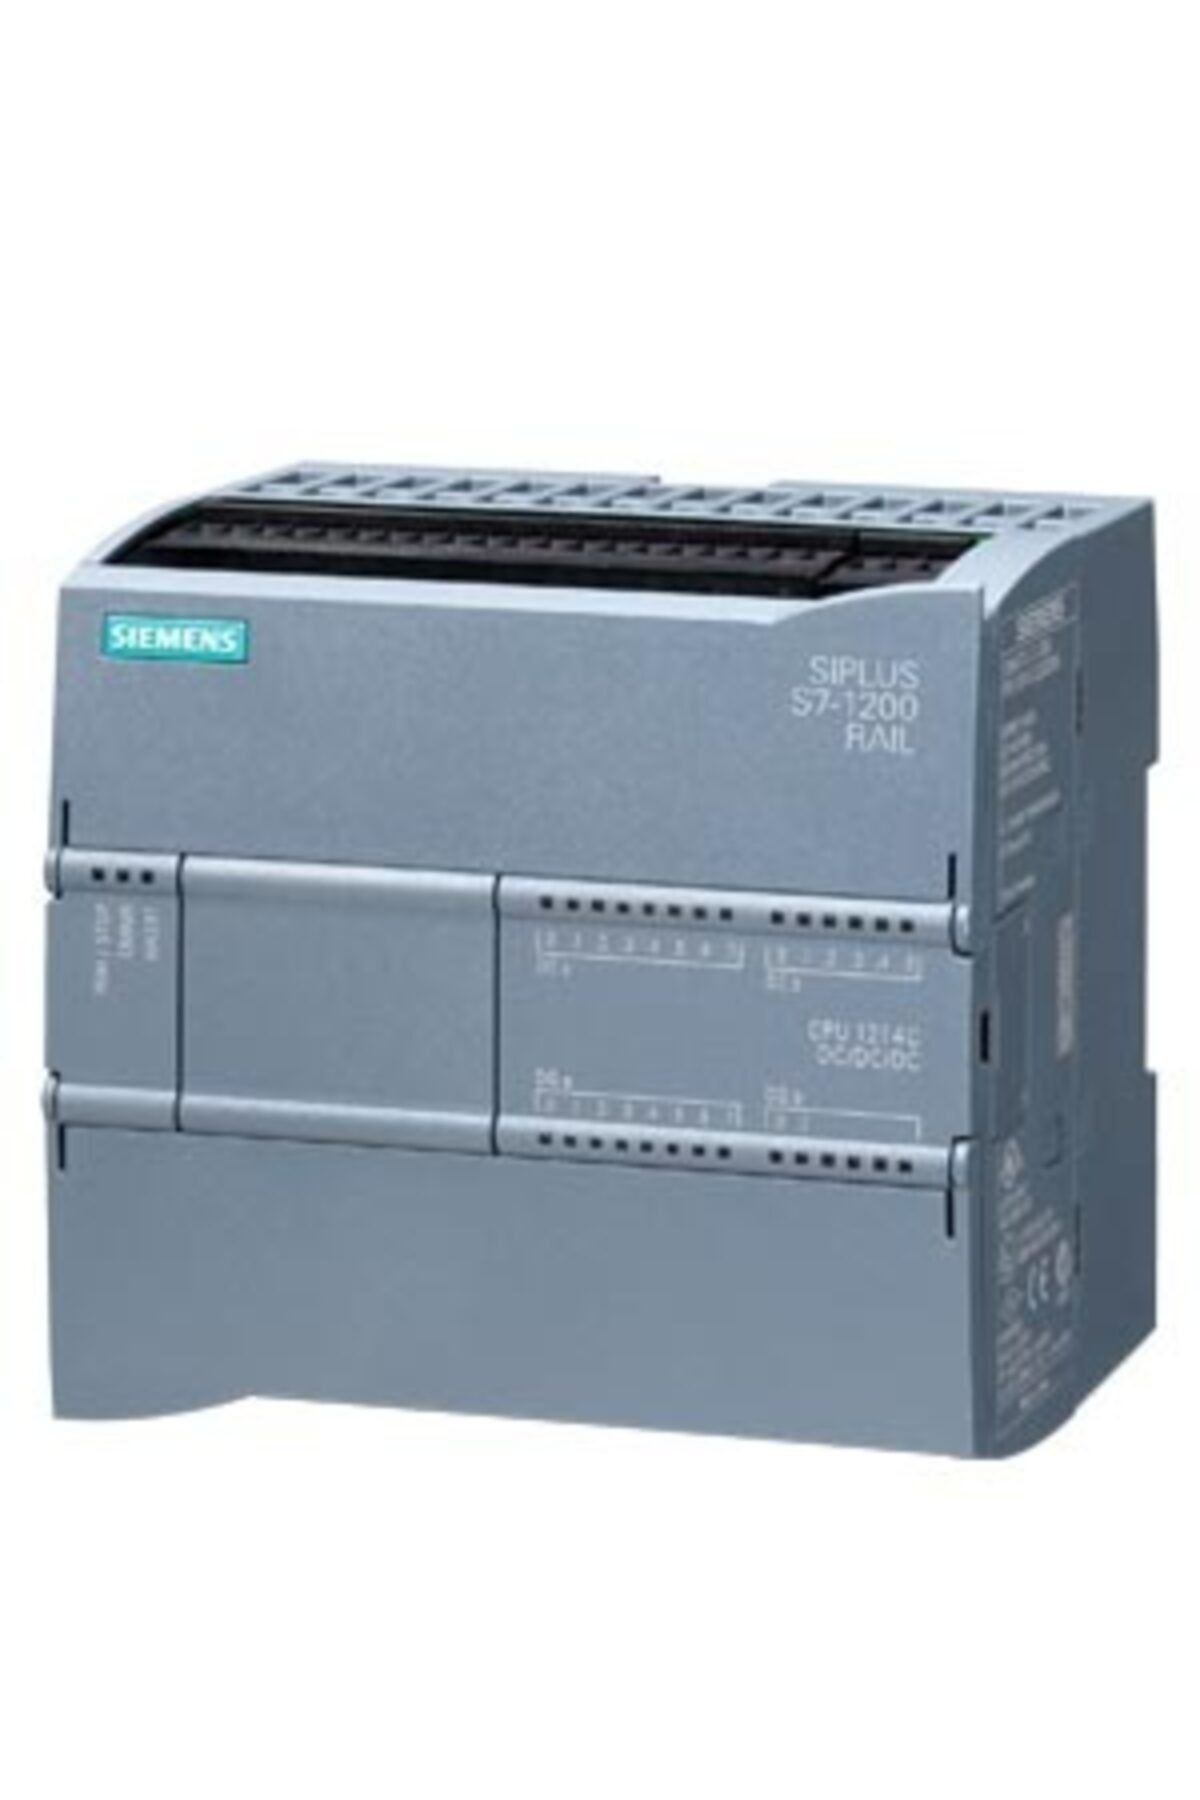 Siemens S7-1200 Plc 6es7214-1ag40-0xb0